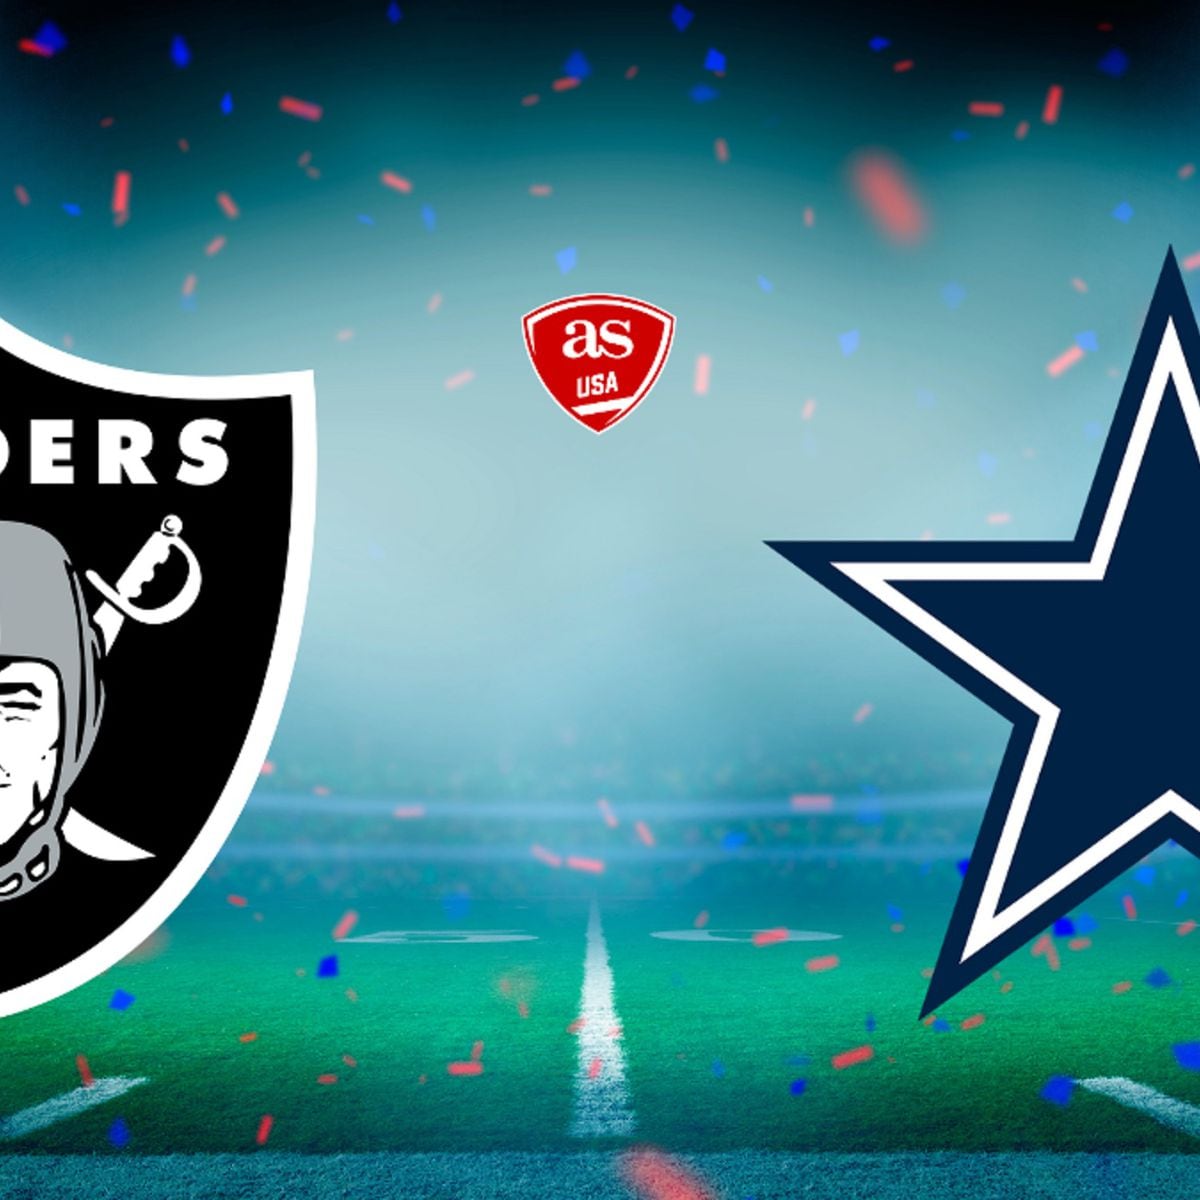 Raiders vs. Cowboys, Week 15 live stream: How to watch online